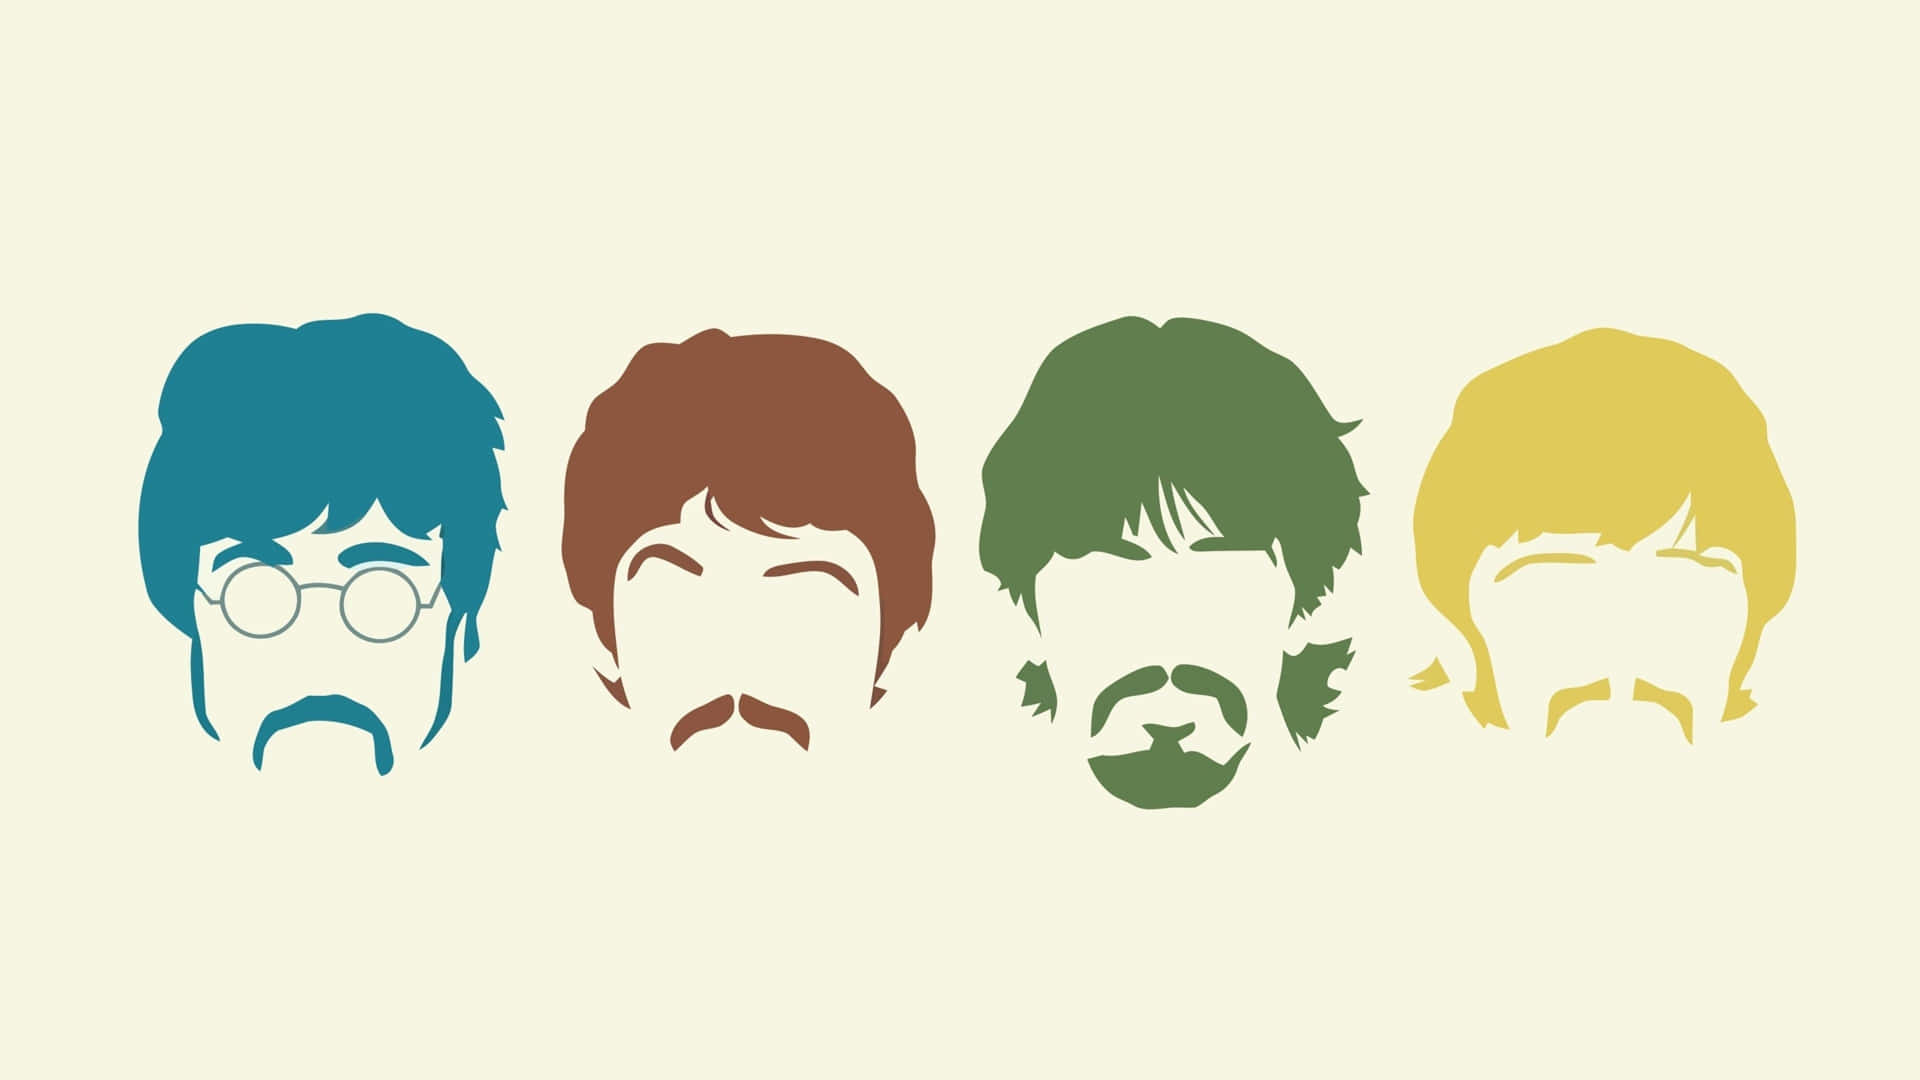 Beatlesbaggrund.